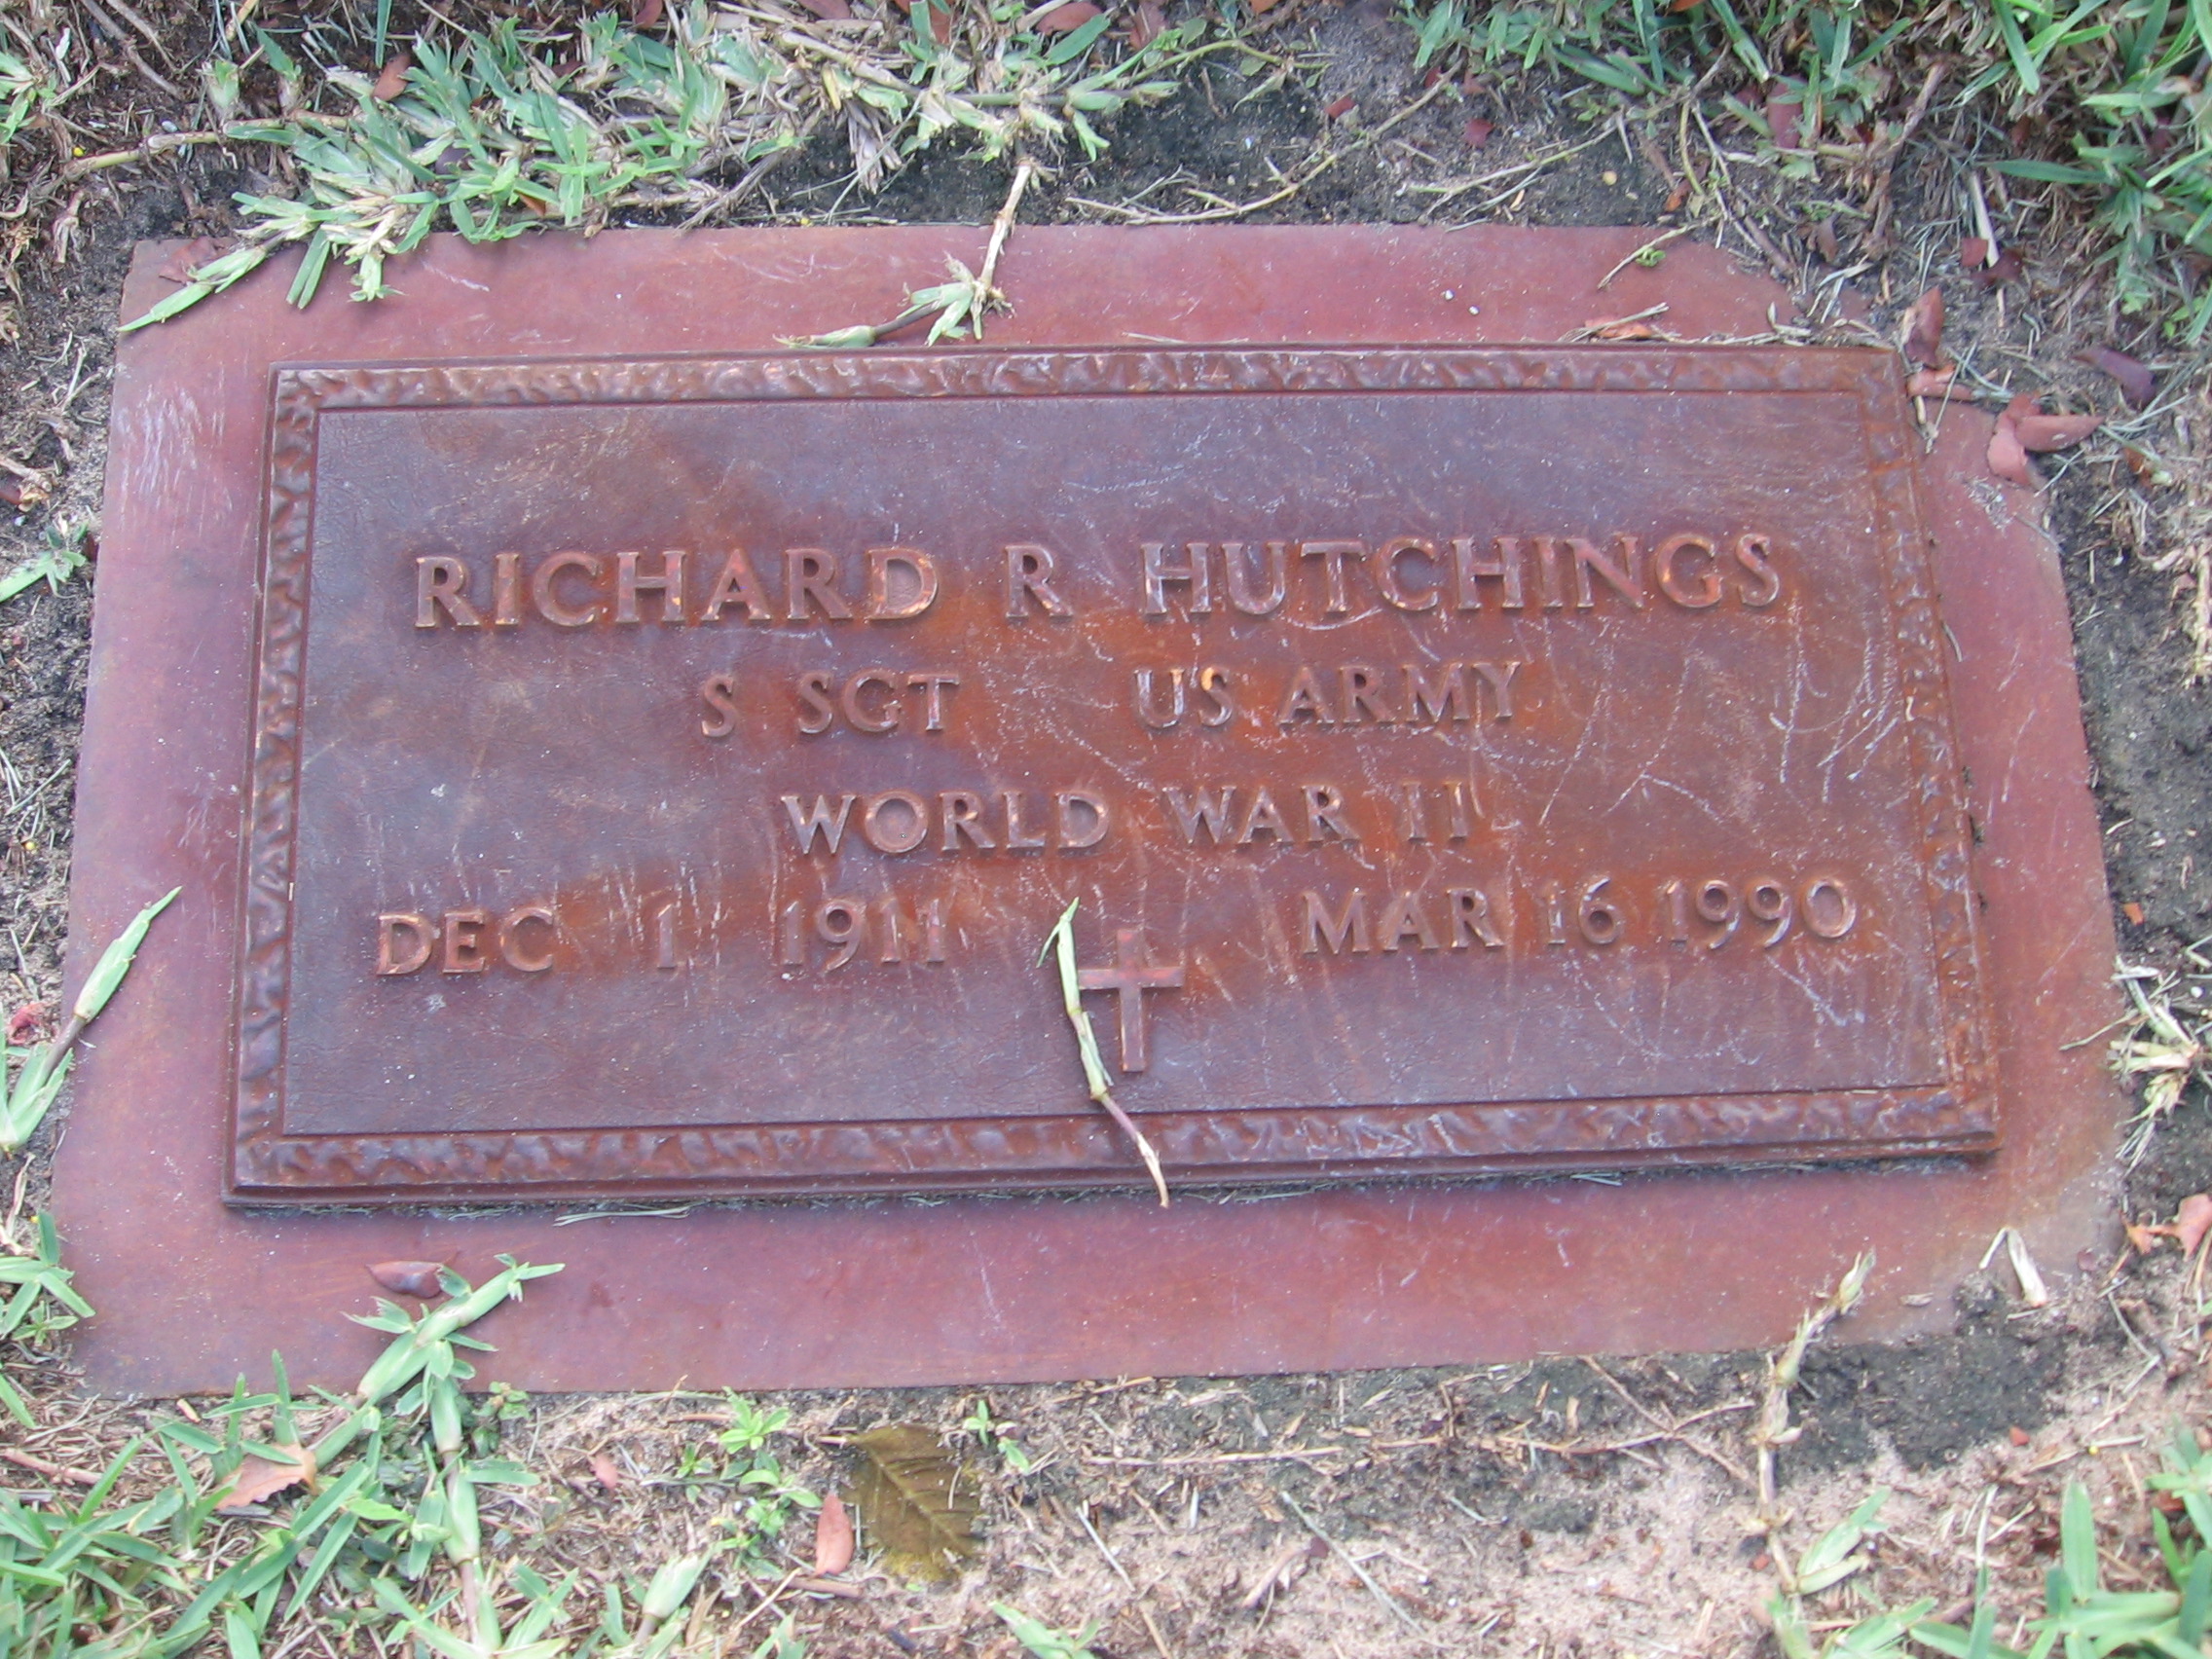 Sgt Richard R Hutchings